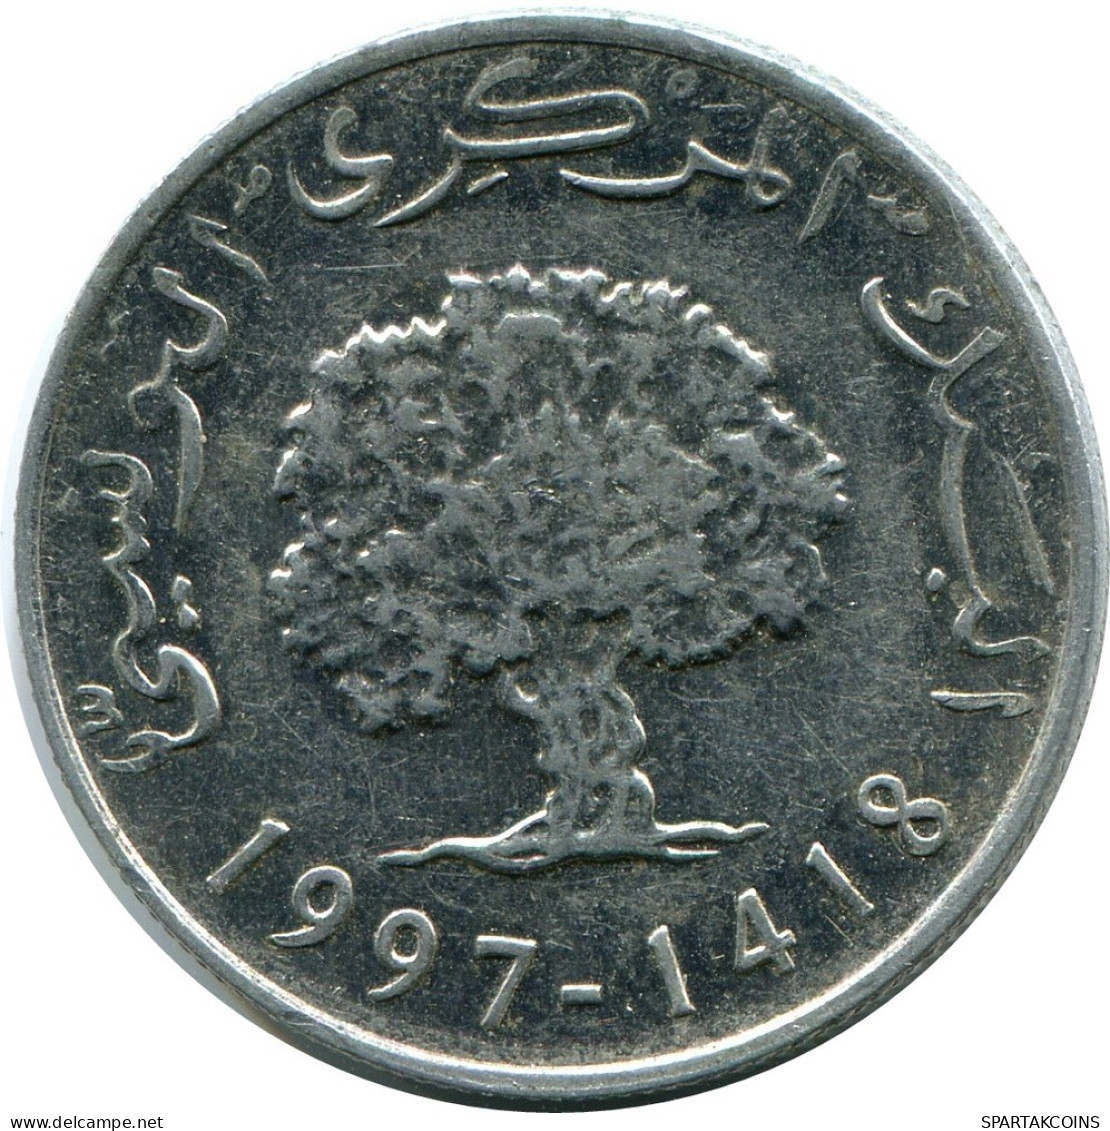 5 MILLIMES 1997 TÚNEZ TUNISIA Islámico Moneda #AP461.E.A - Túnez